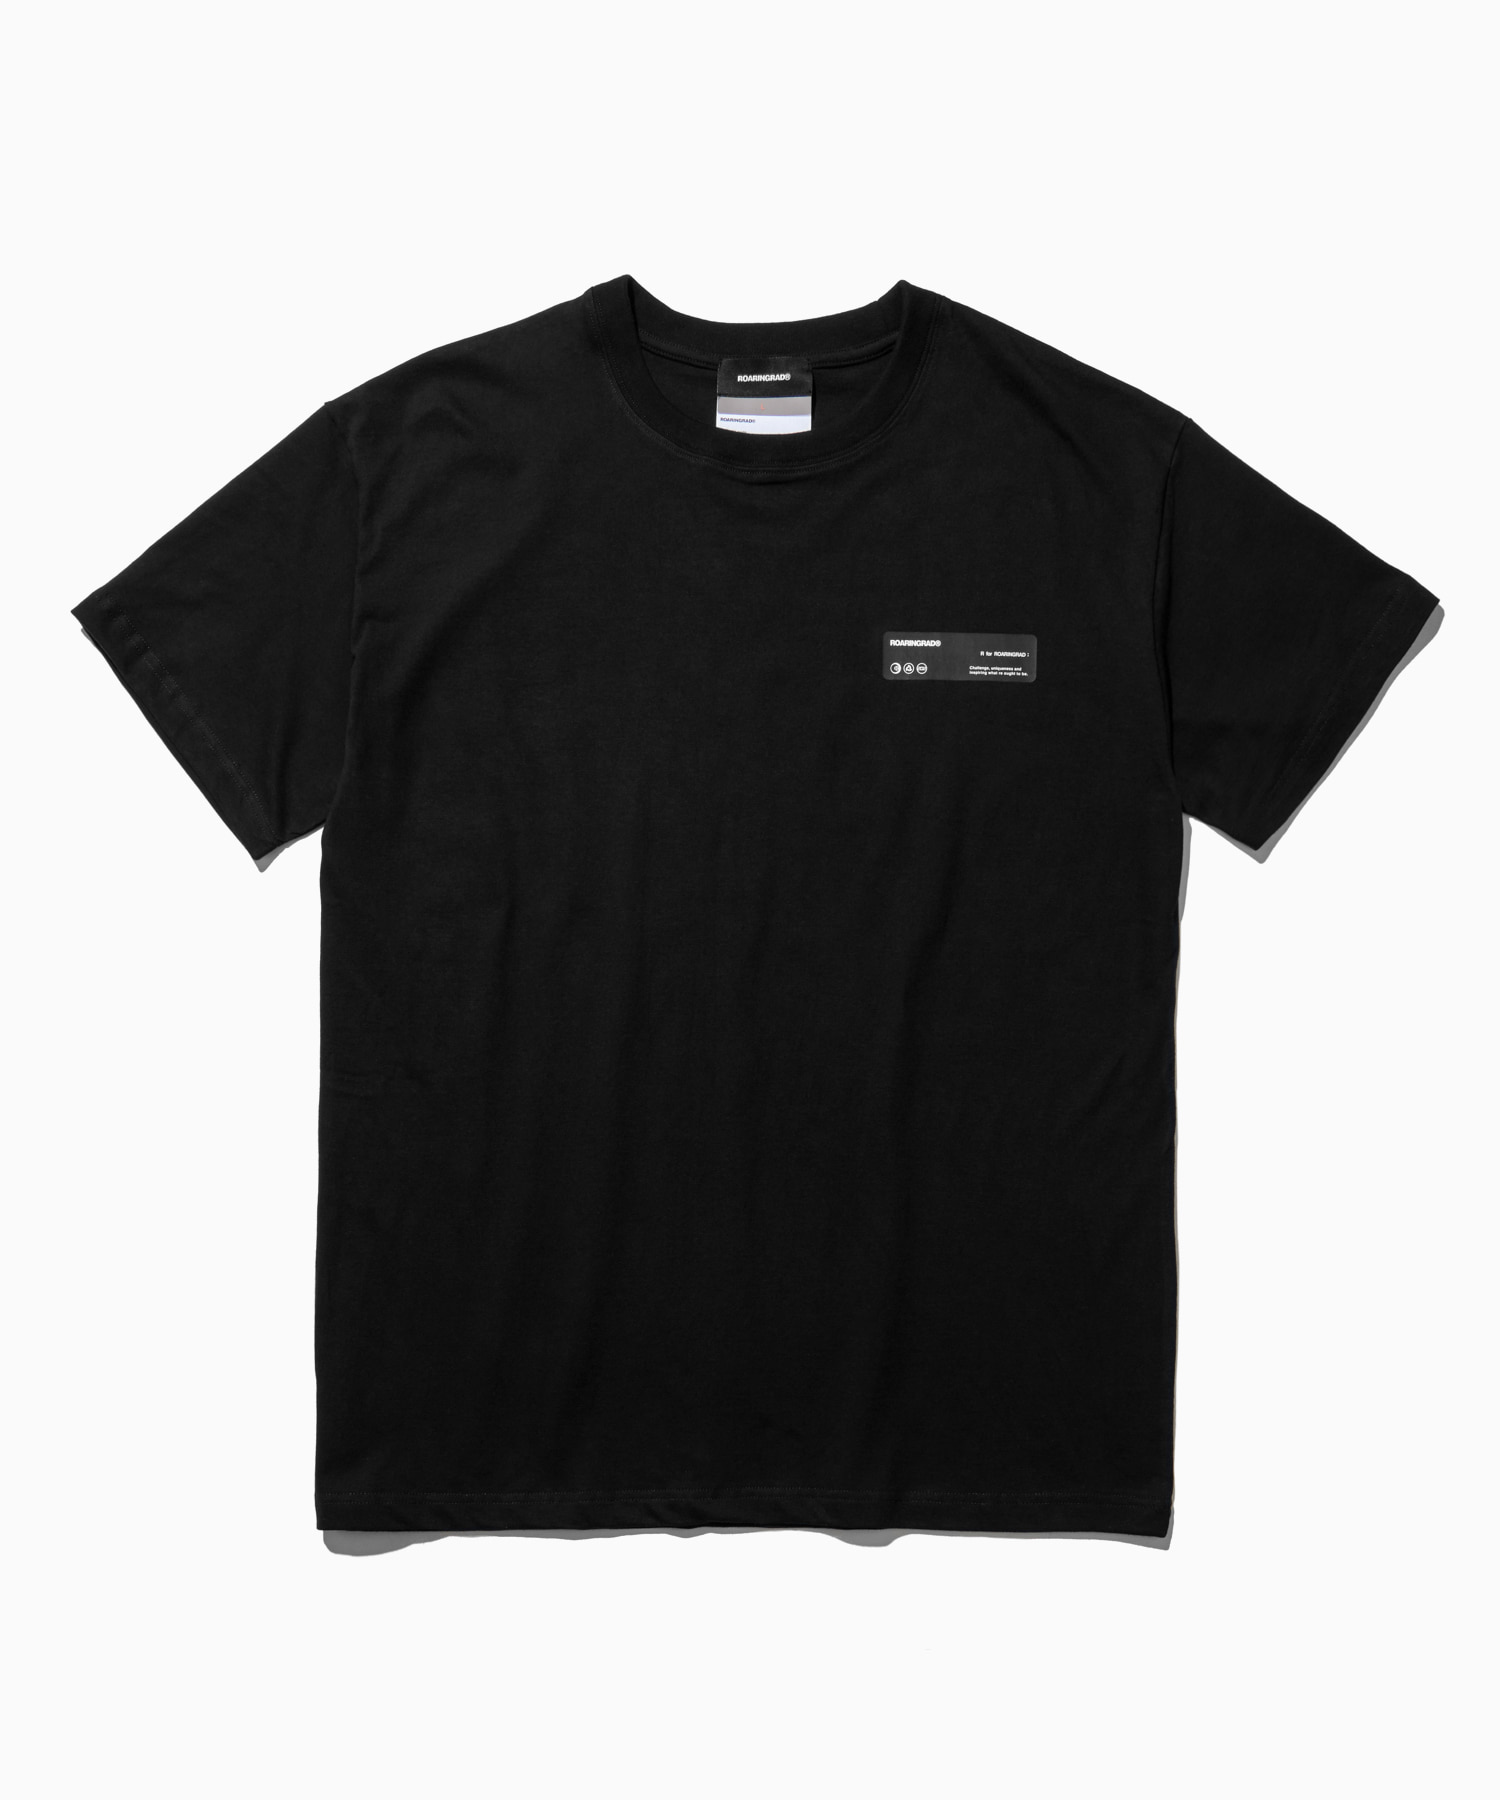 flim signature logo t-shirt black - 로어링라드(ROARINGRAD)